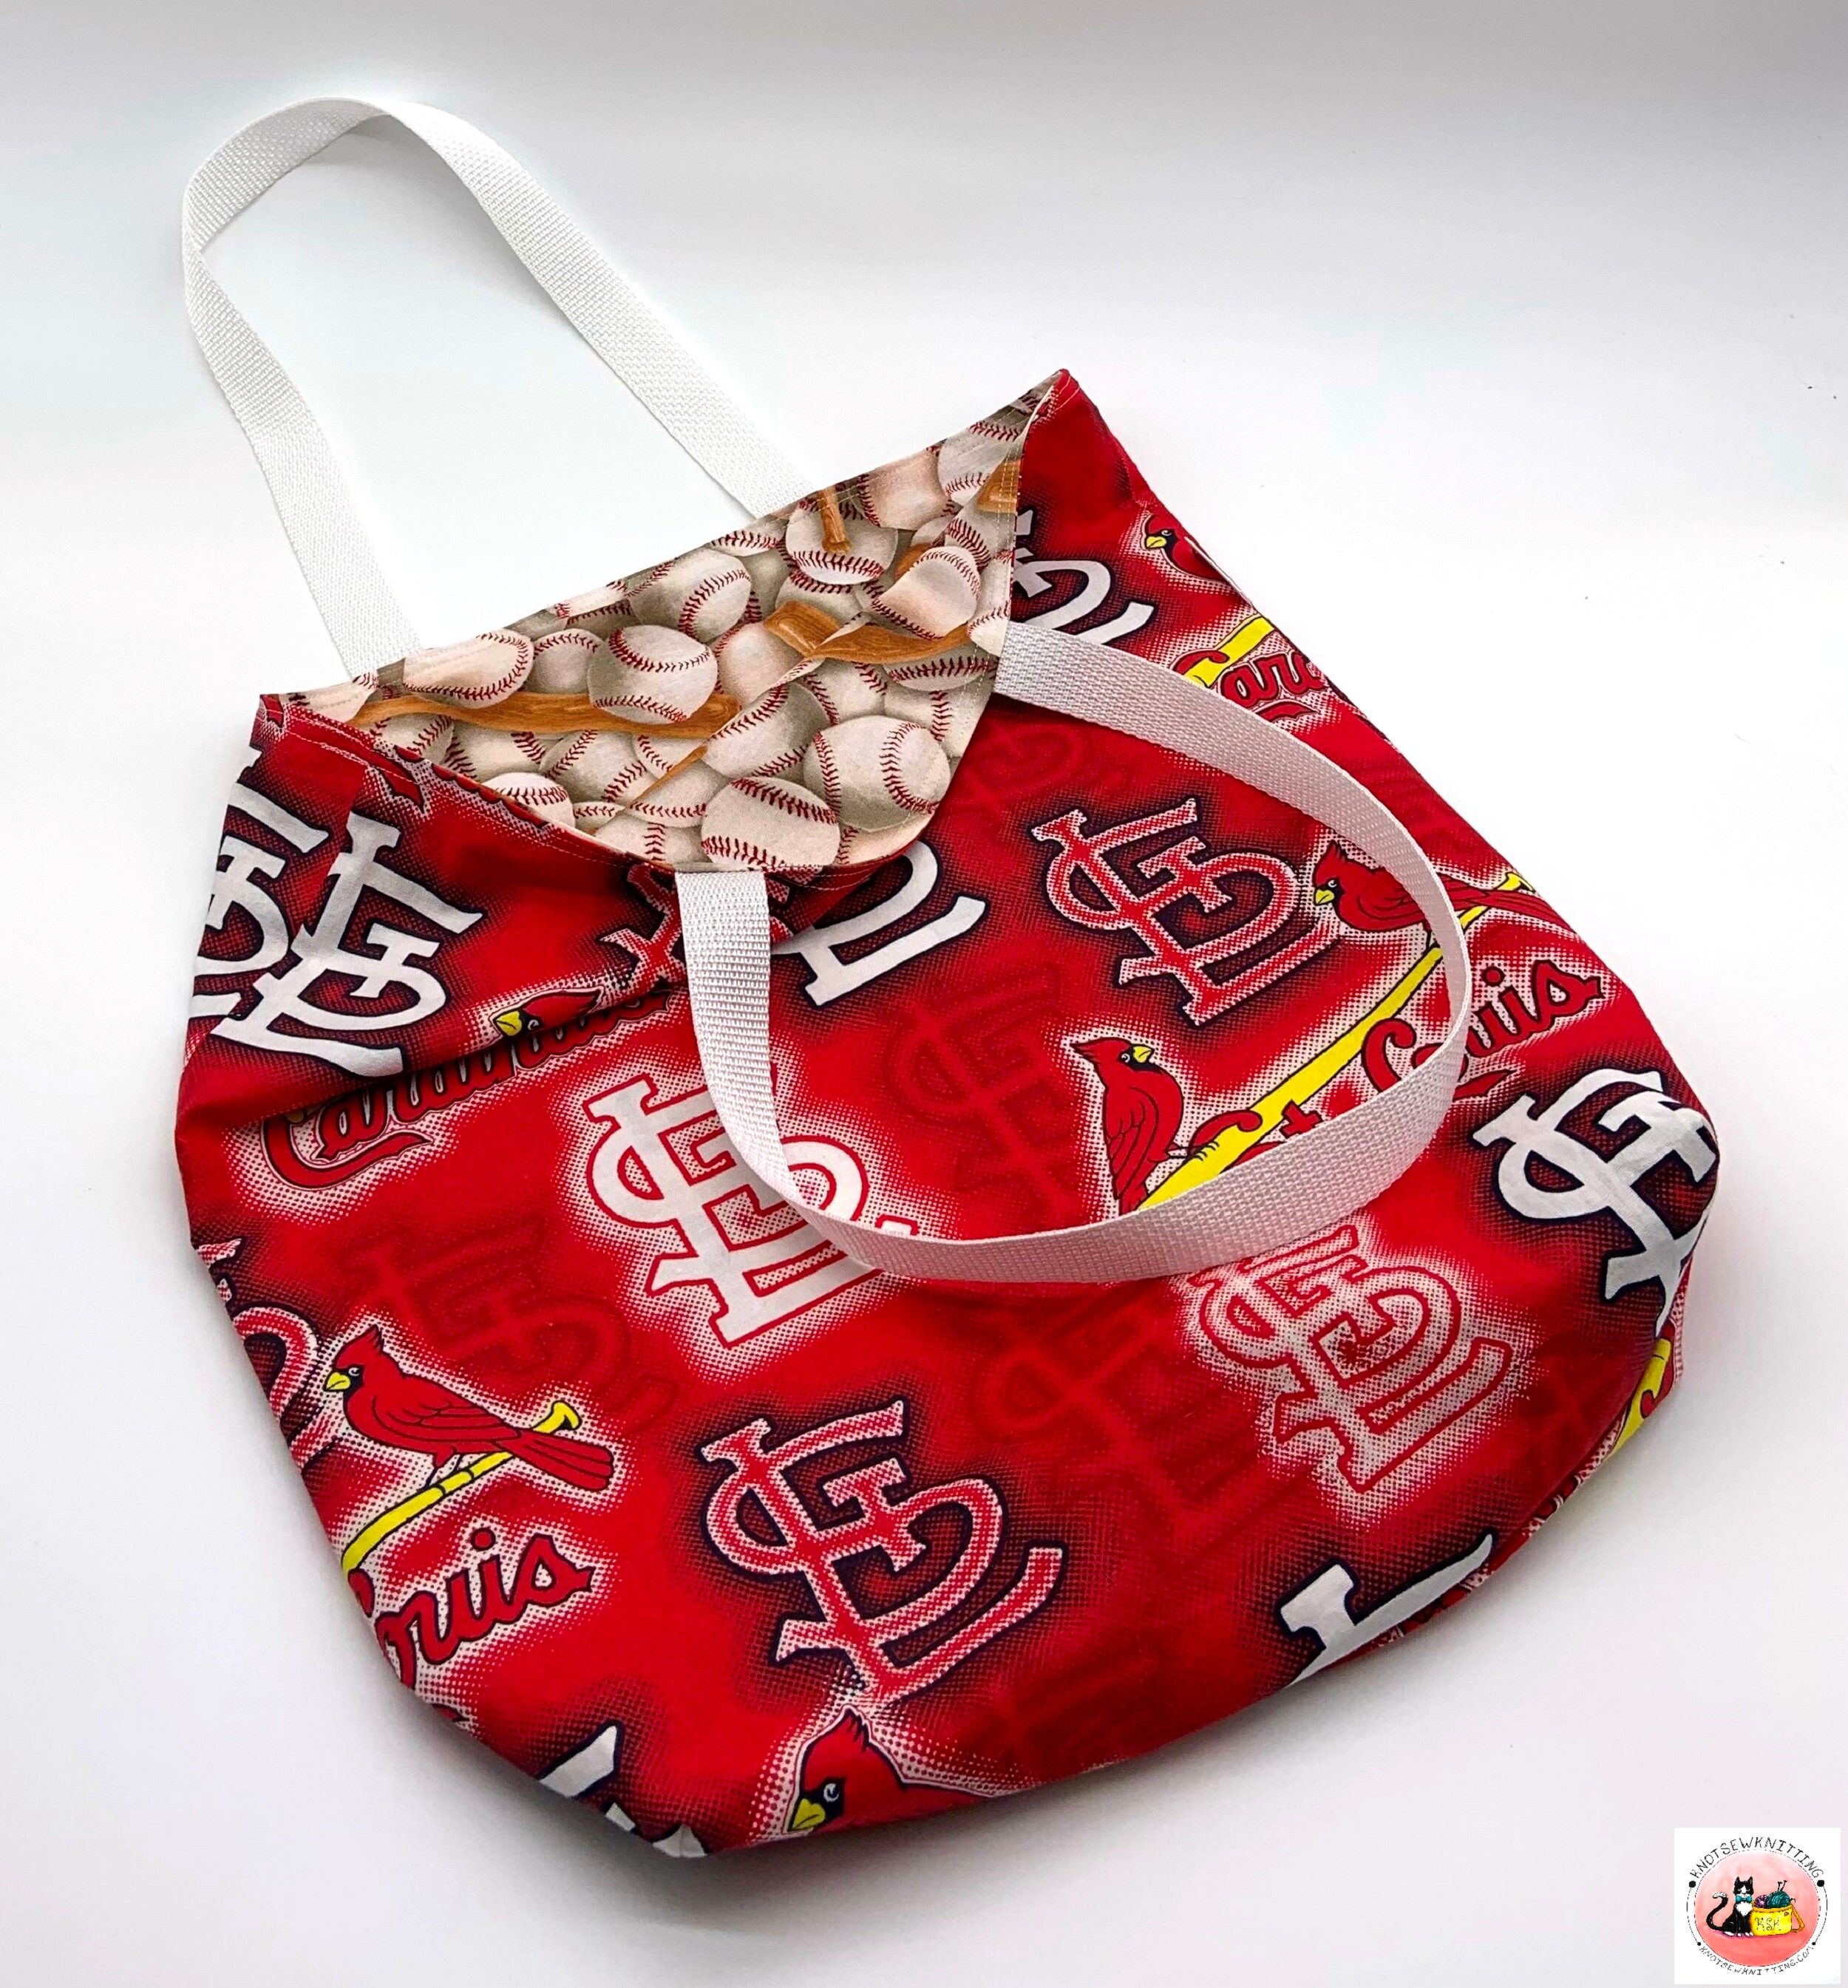 St Louis Cardinals MLB Team Logo Large reuseable tote bag